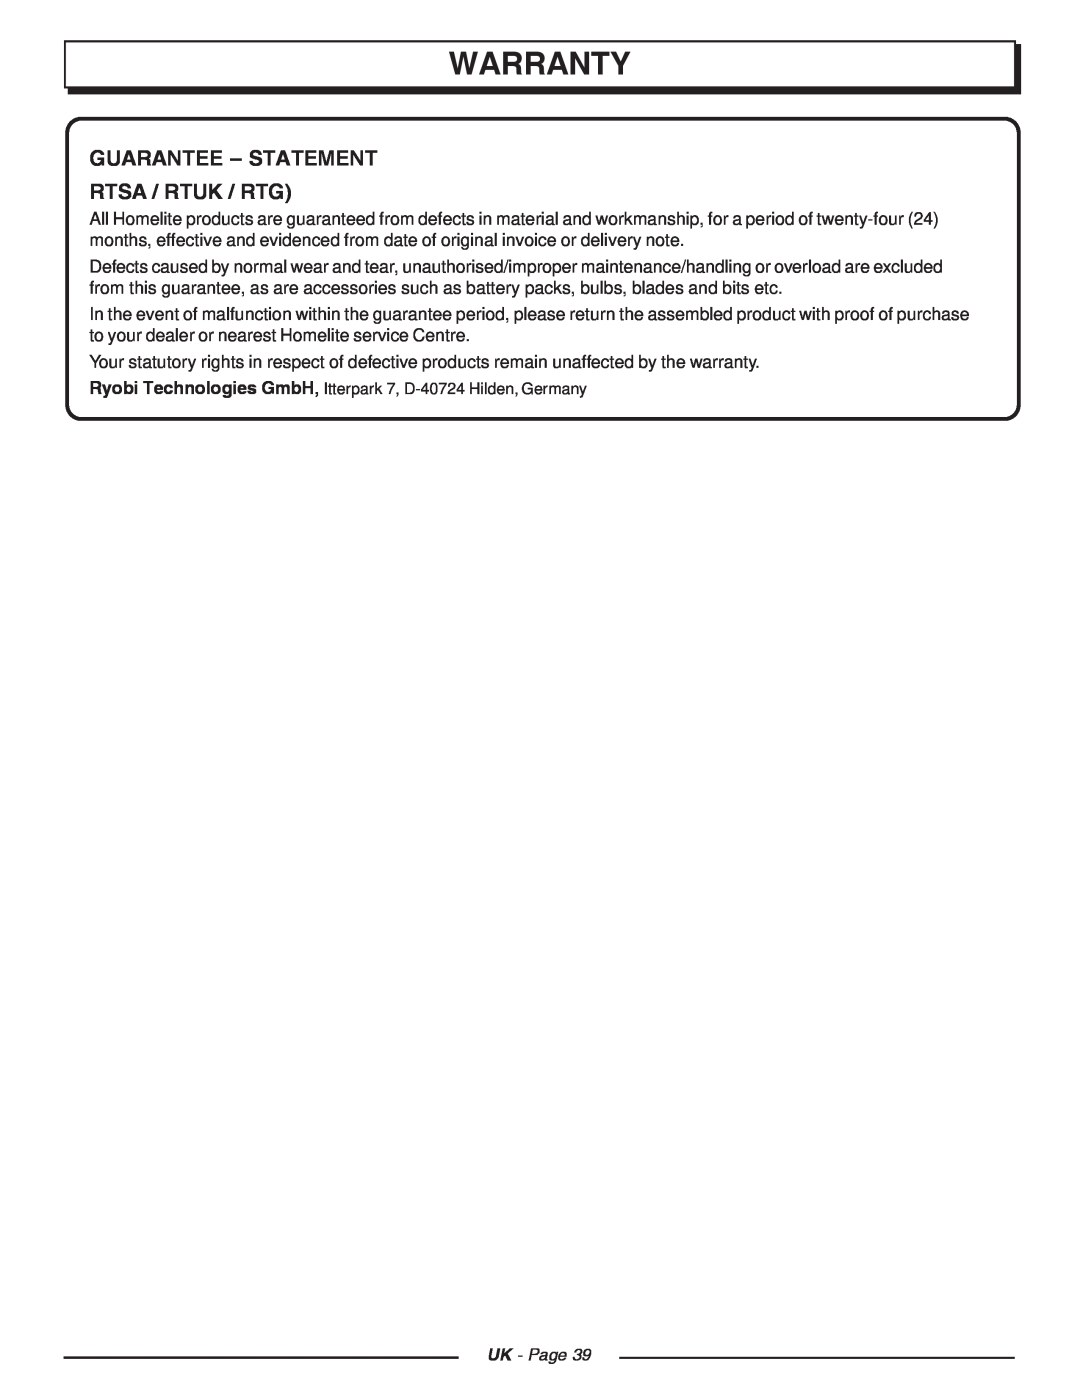 Homelite CSP4518, CSP3816 manual Warranty, Guarantee - Statement Rtsa / Rtuk / Rtg, UK - Page 